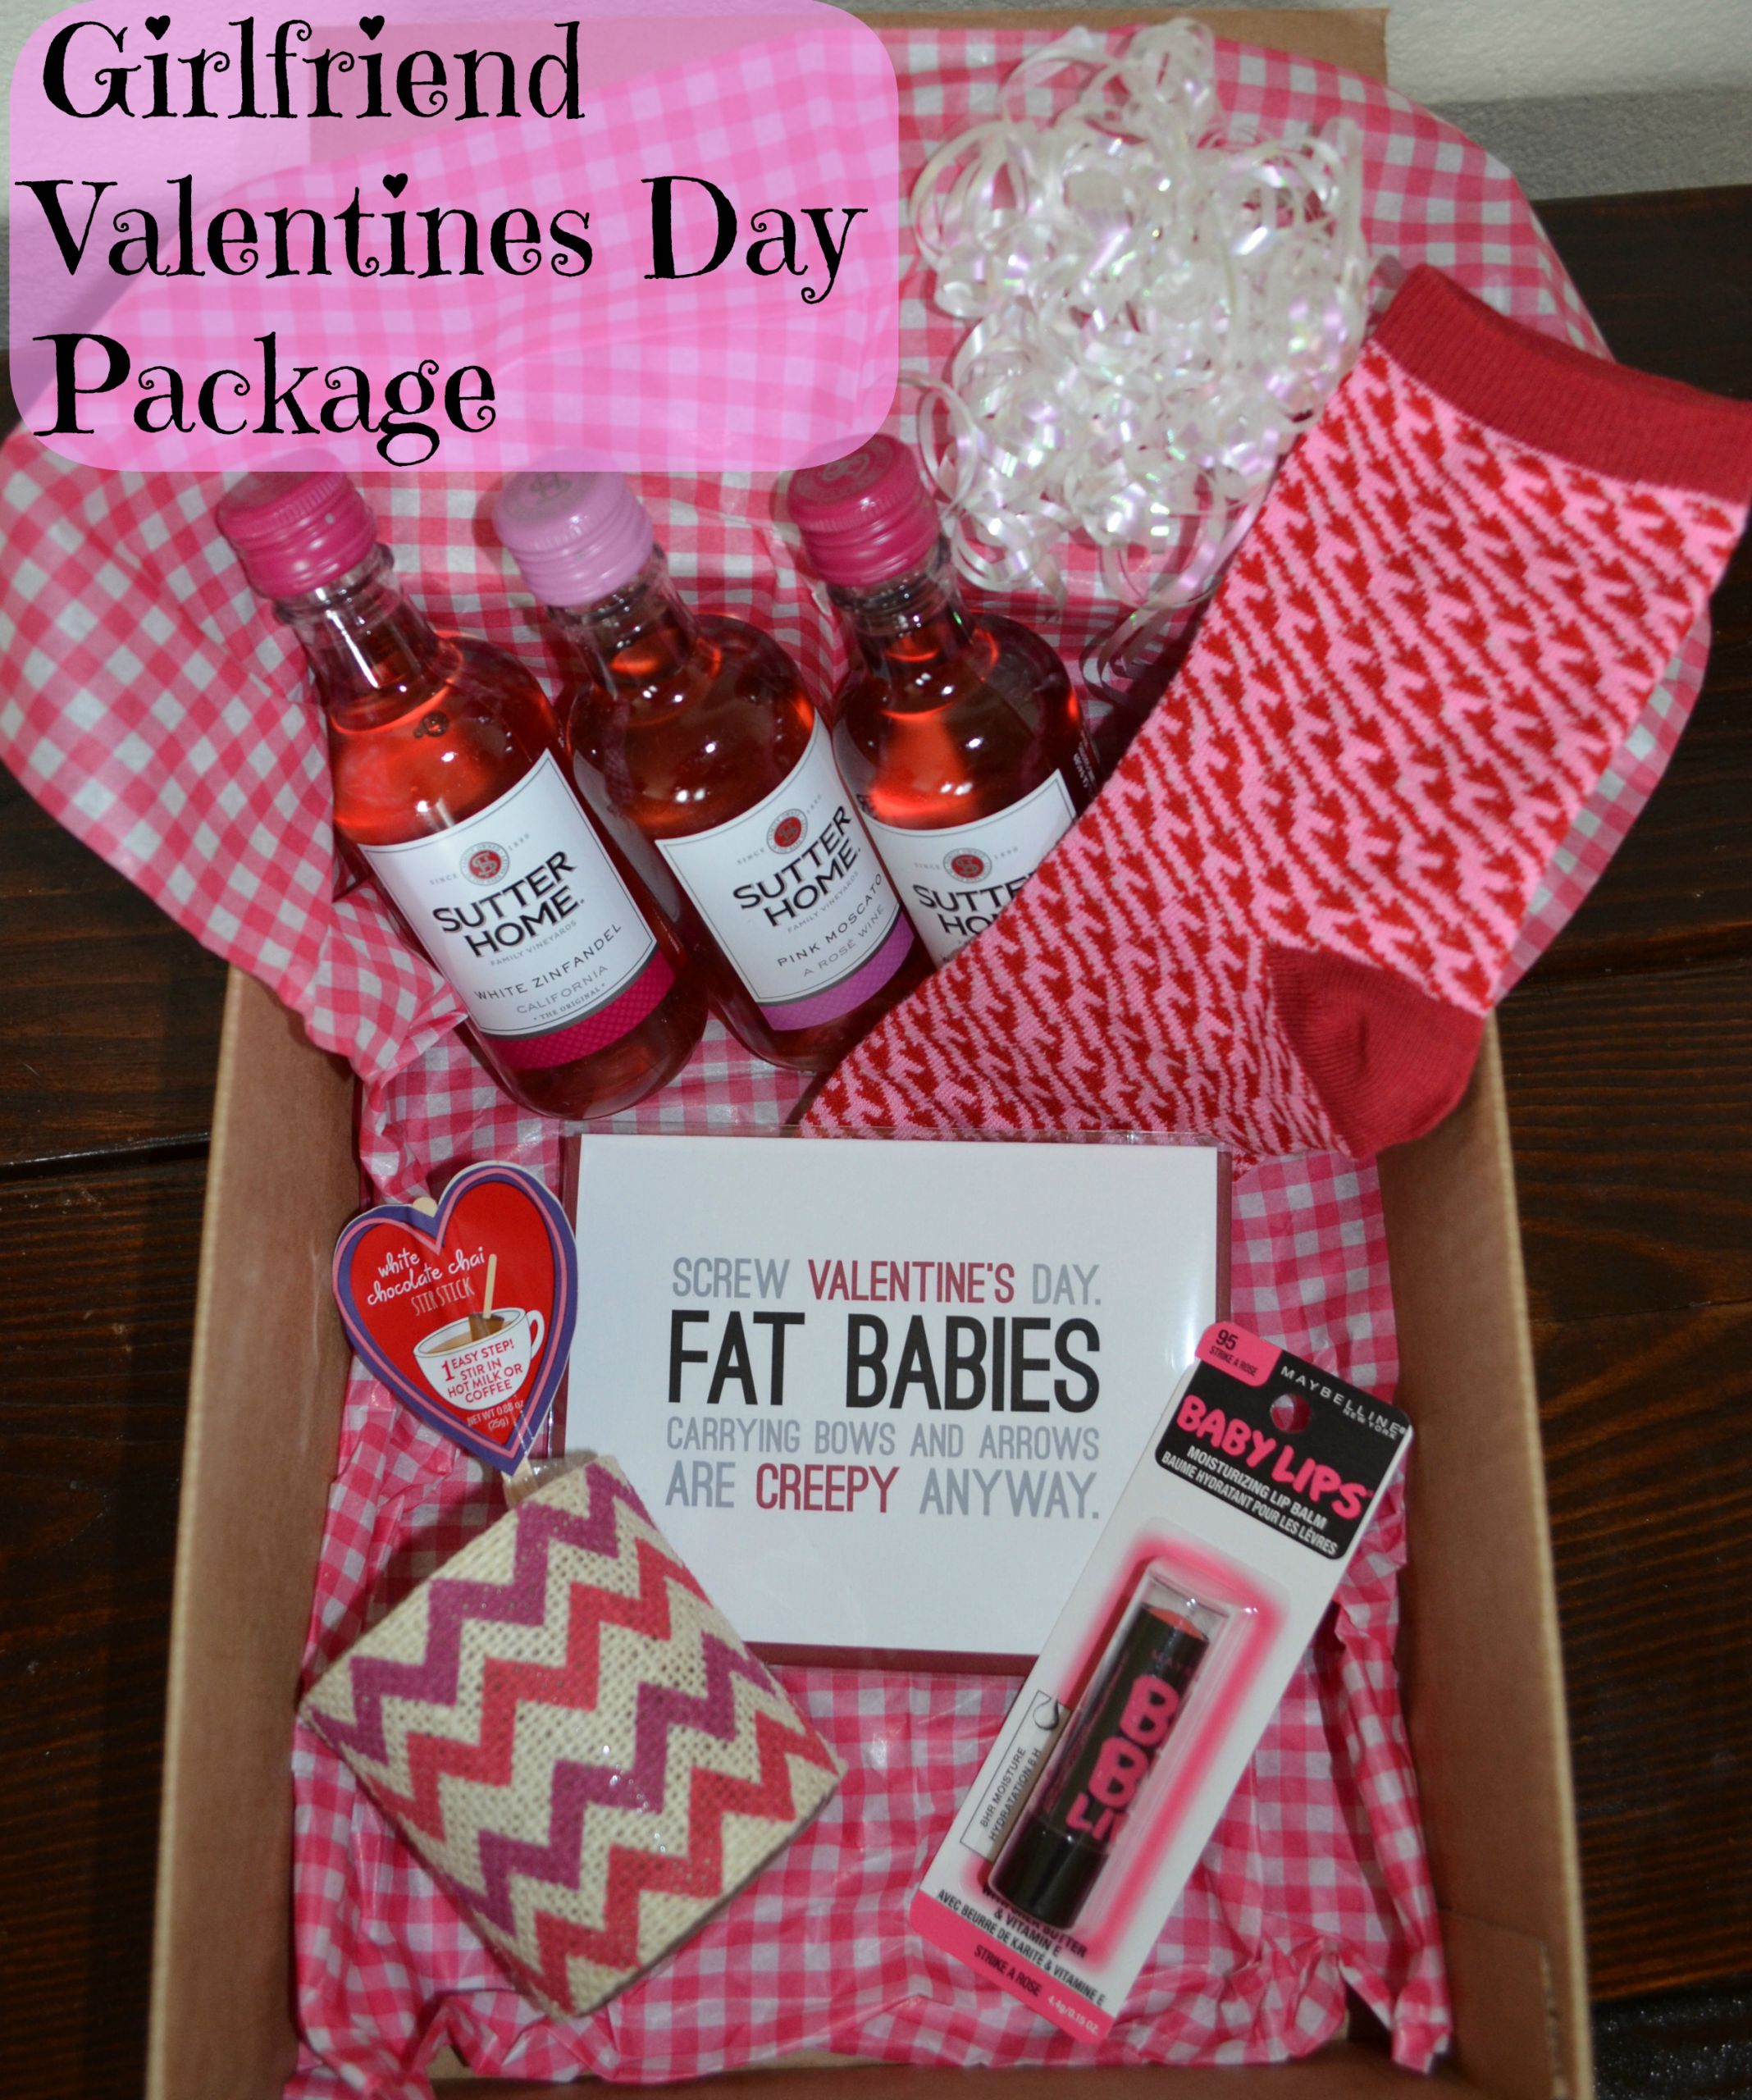 Ideas For Valentines Gift For Boyfriend
 24 LOVELY VALENTINE S DAY GIFTS FOR YOUR BOYFRIEND